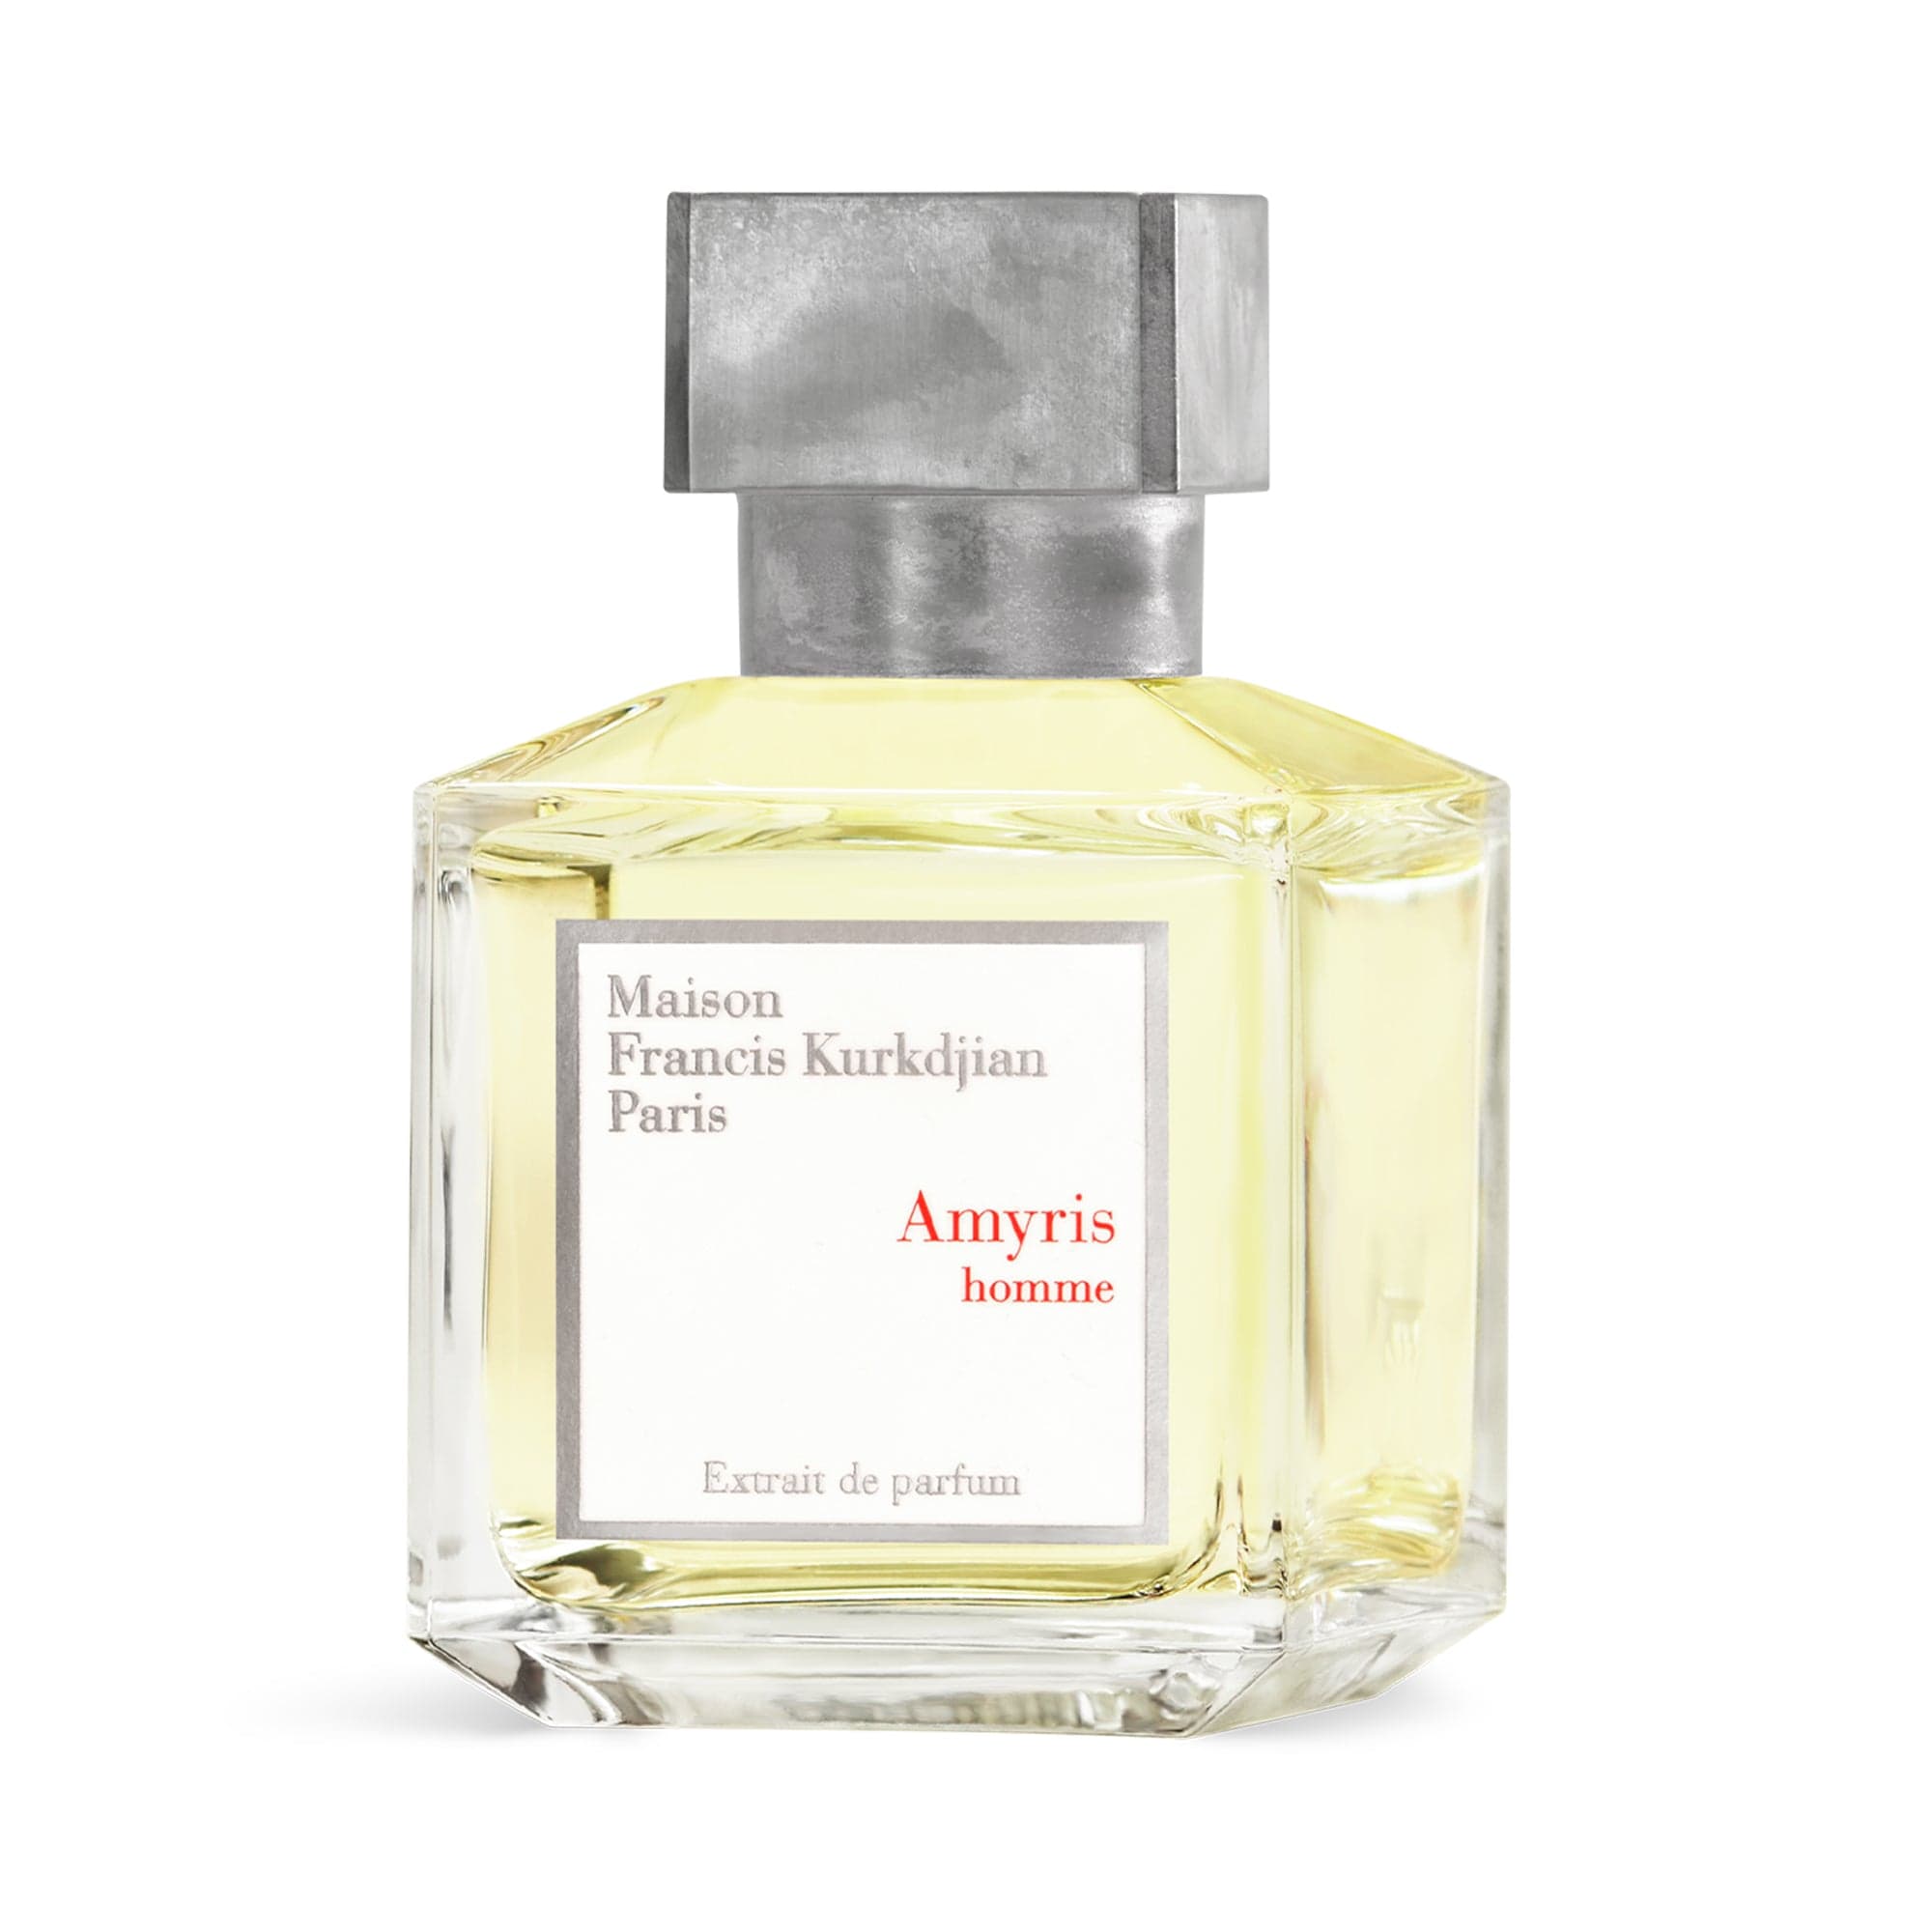 Amyris Homme Extracto de perfume de Maison Francis Kurkdjian